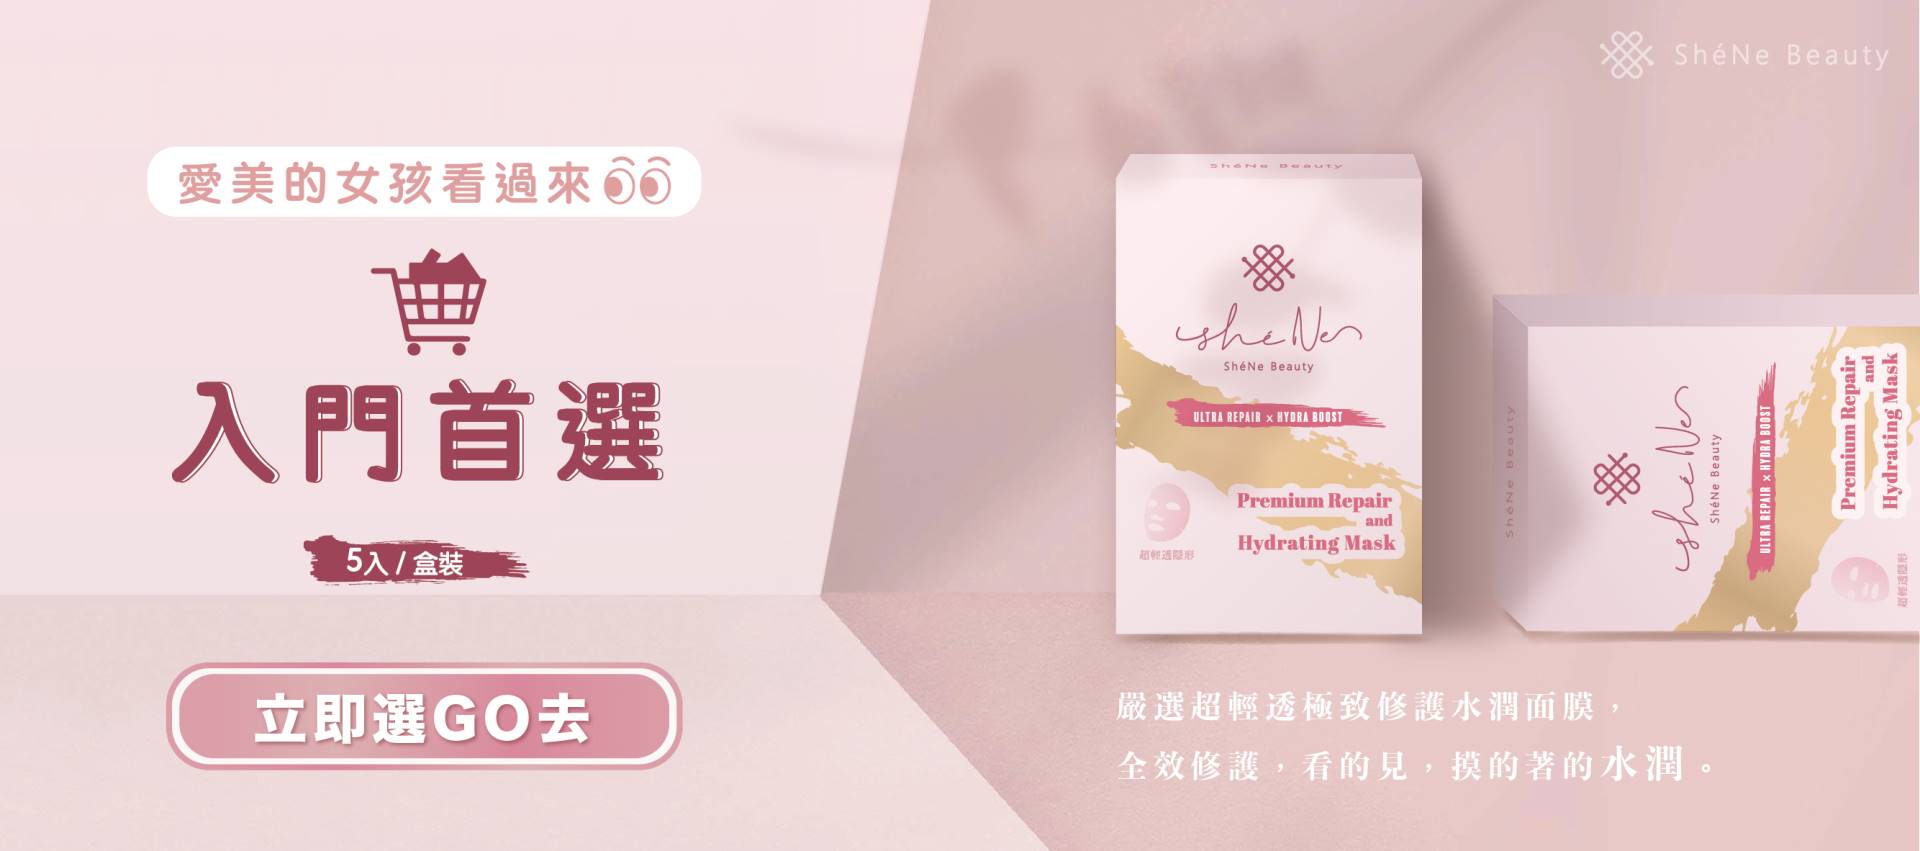 ShéNe Beauty 思霓生物科技- Personal care, makeup, fragrance